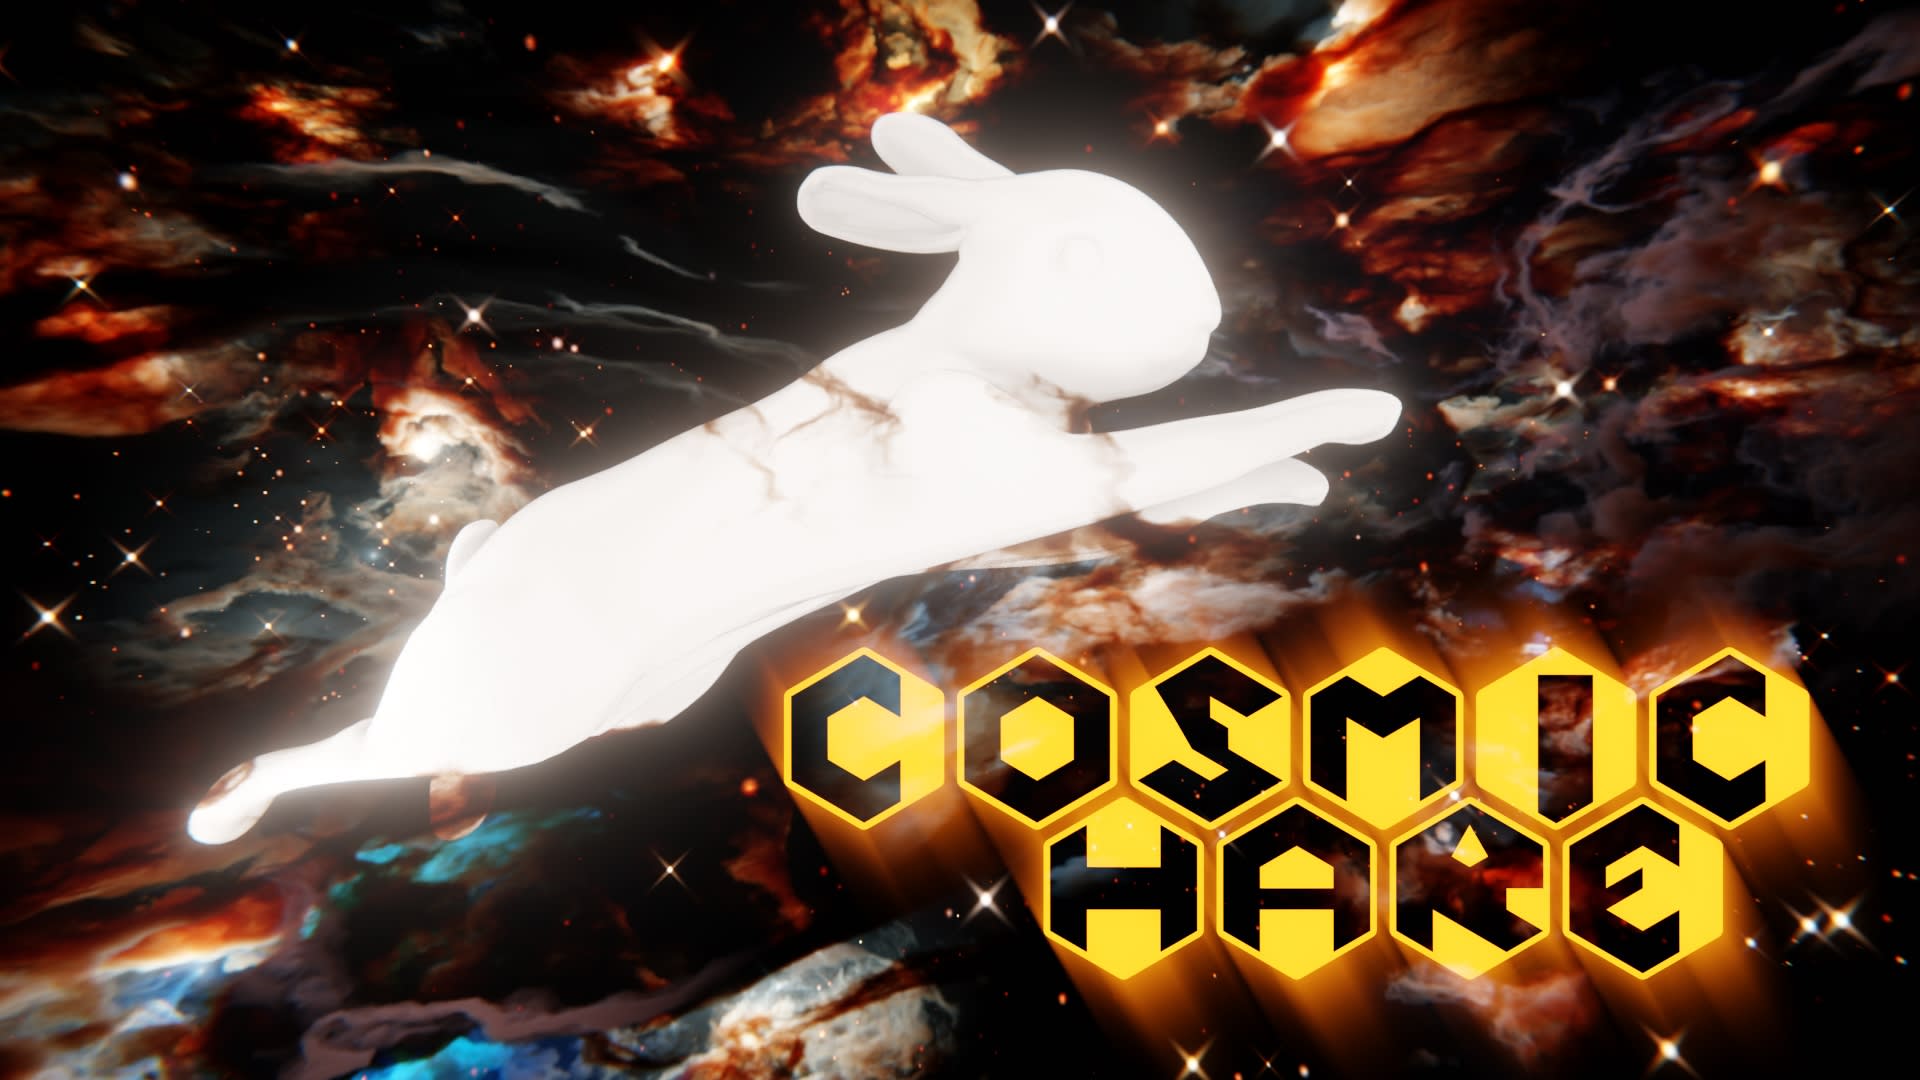 Cosmic Hare